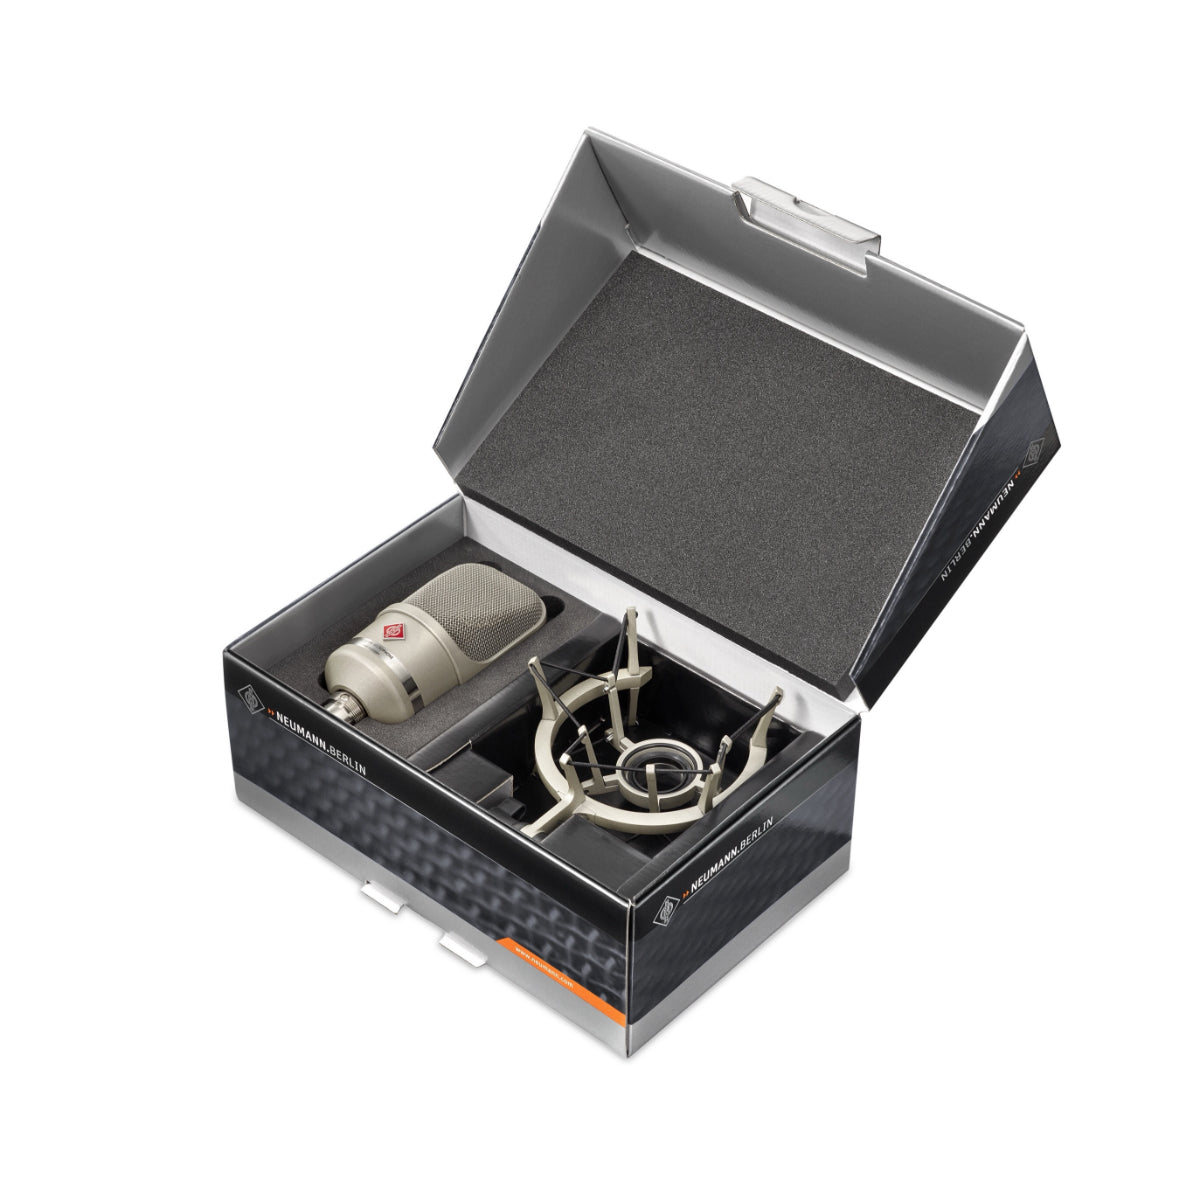 Neumann TLM 107 Studio Set Large Diaphragm Microphone, Multipattern, EA 4 Elastic Suspension -carton